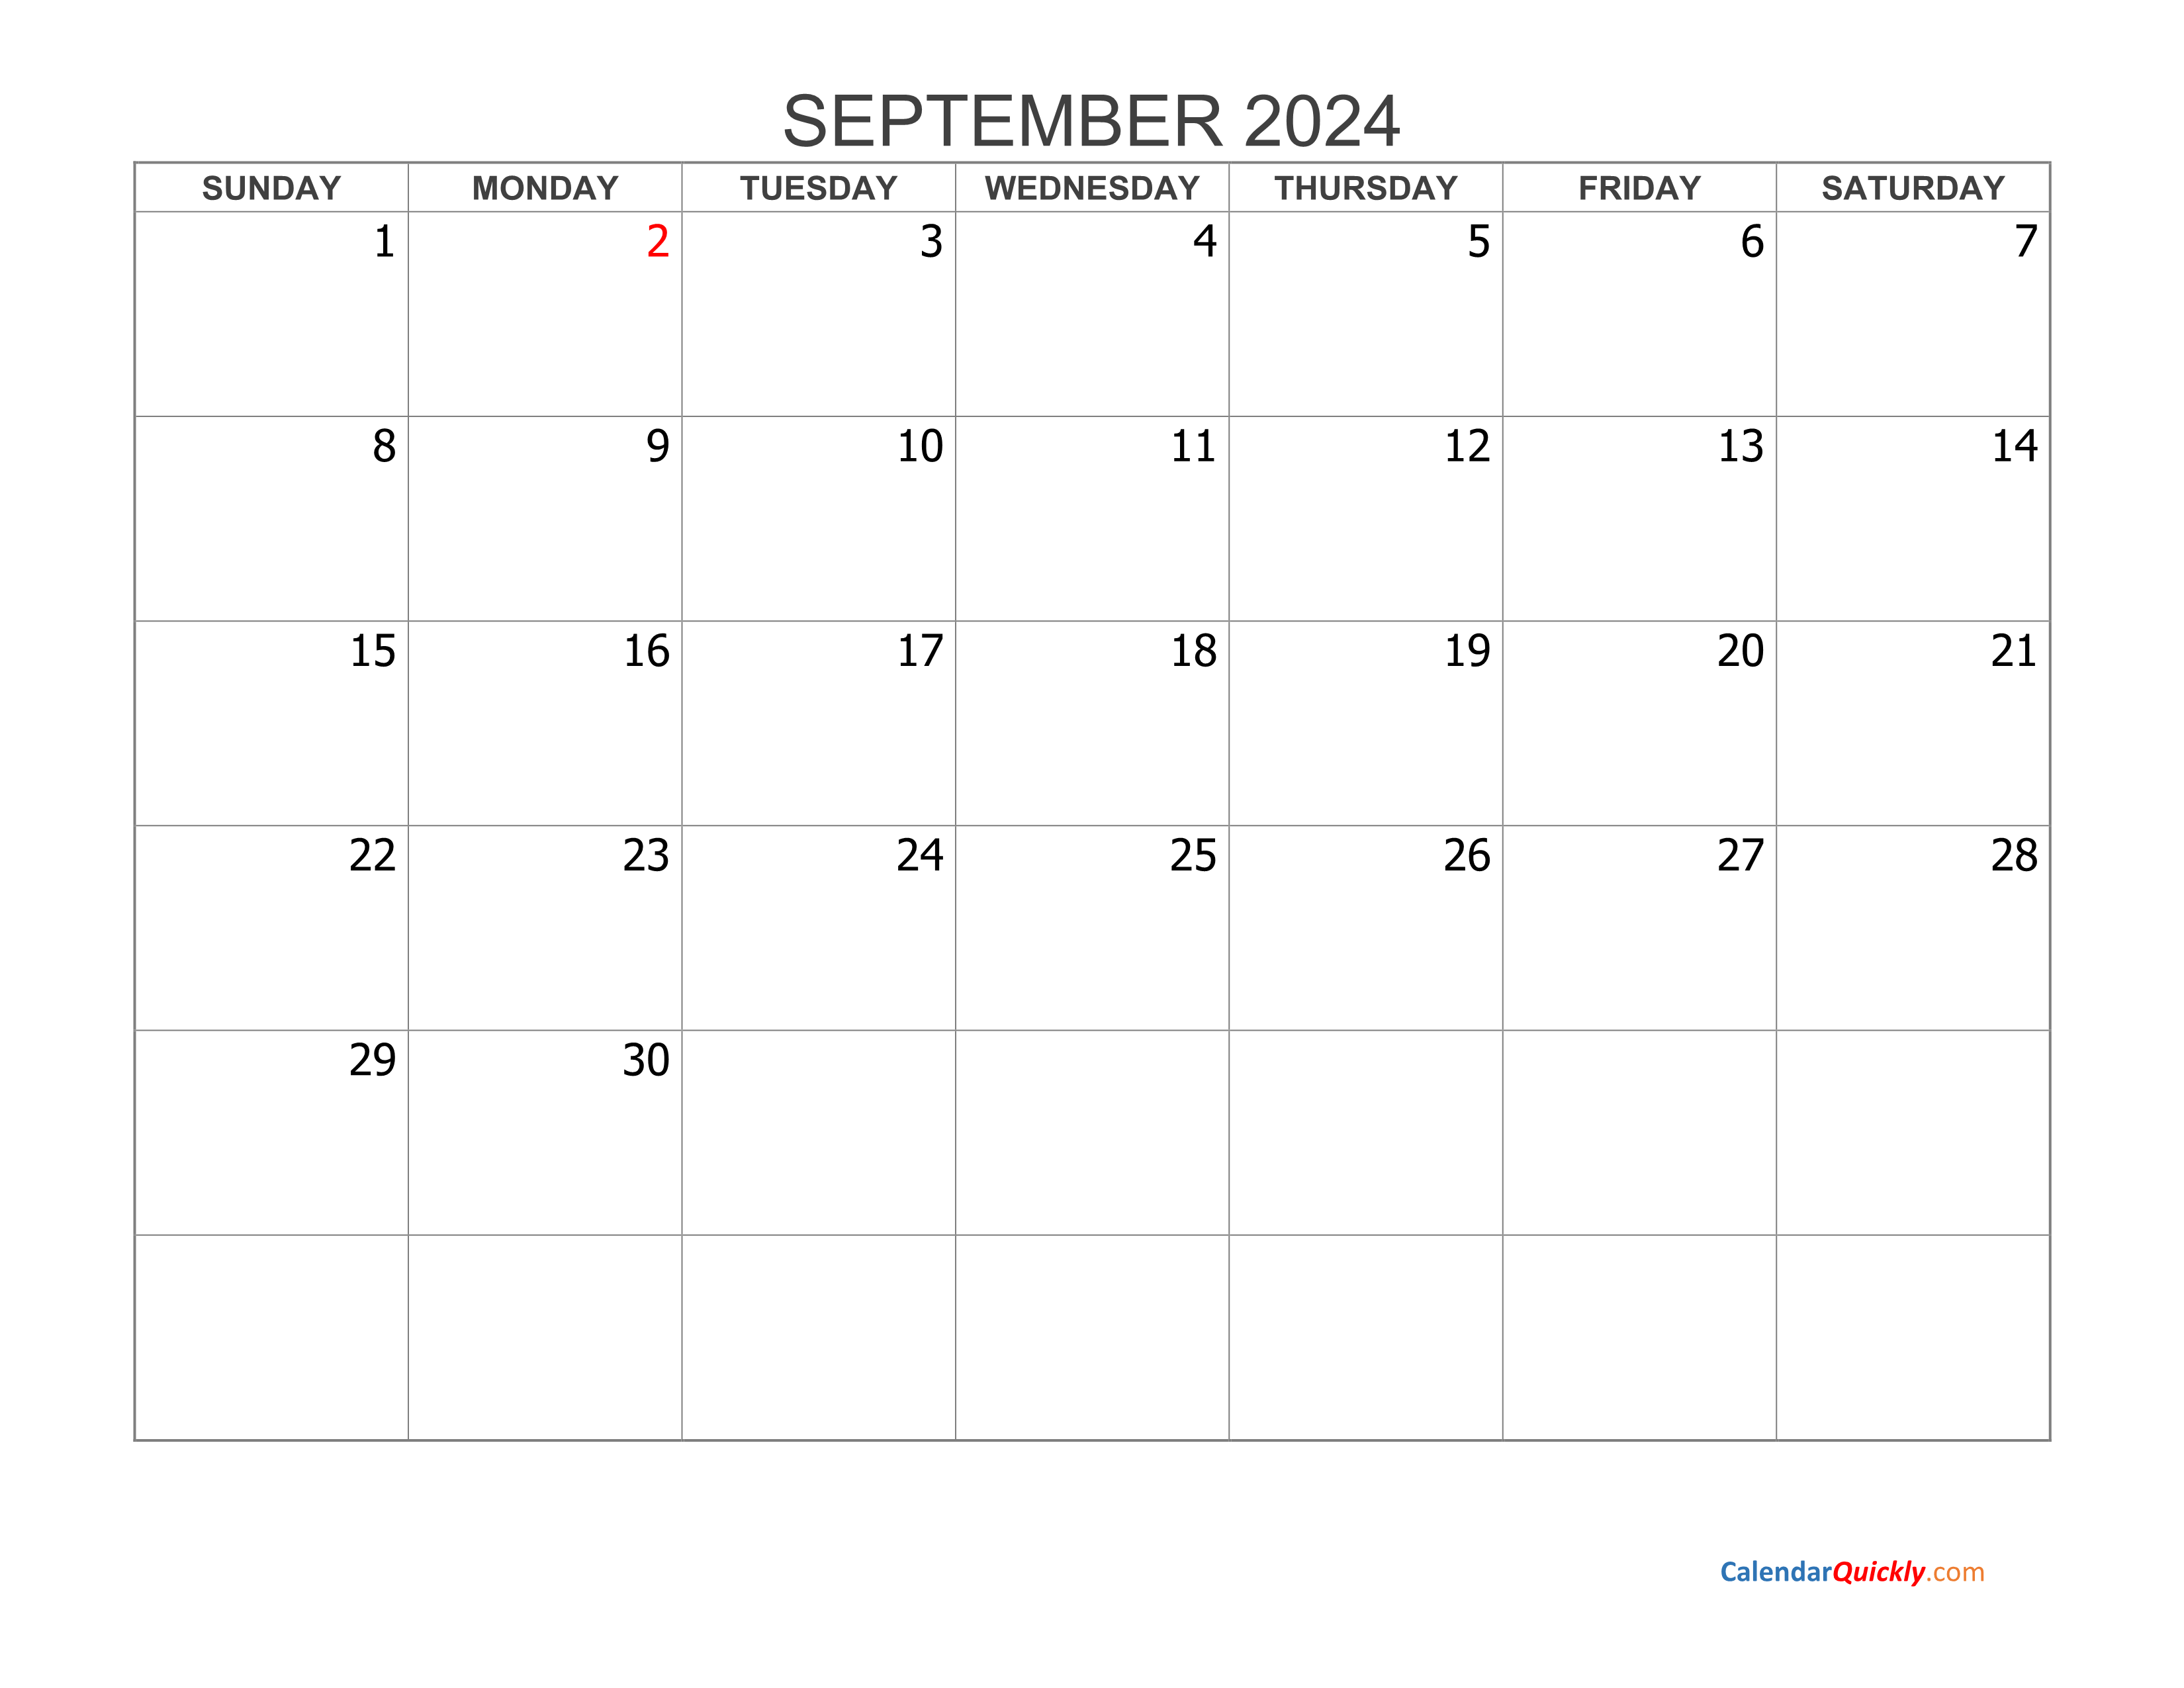 september-2024-blank-calendar-calendar-quickly